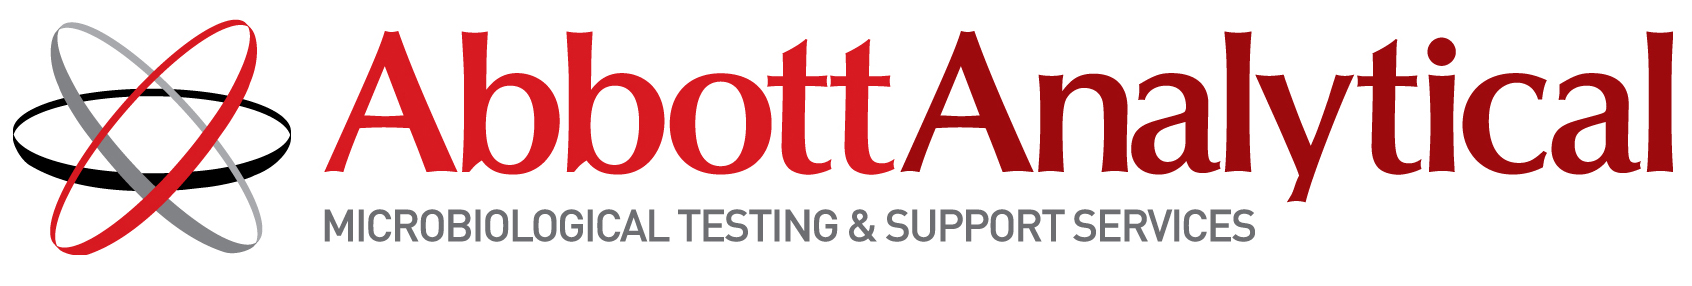 Abbott Analytical Ltd